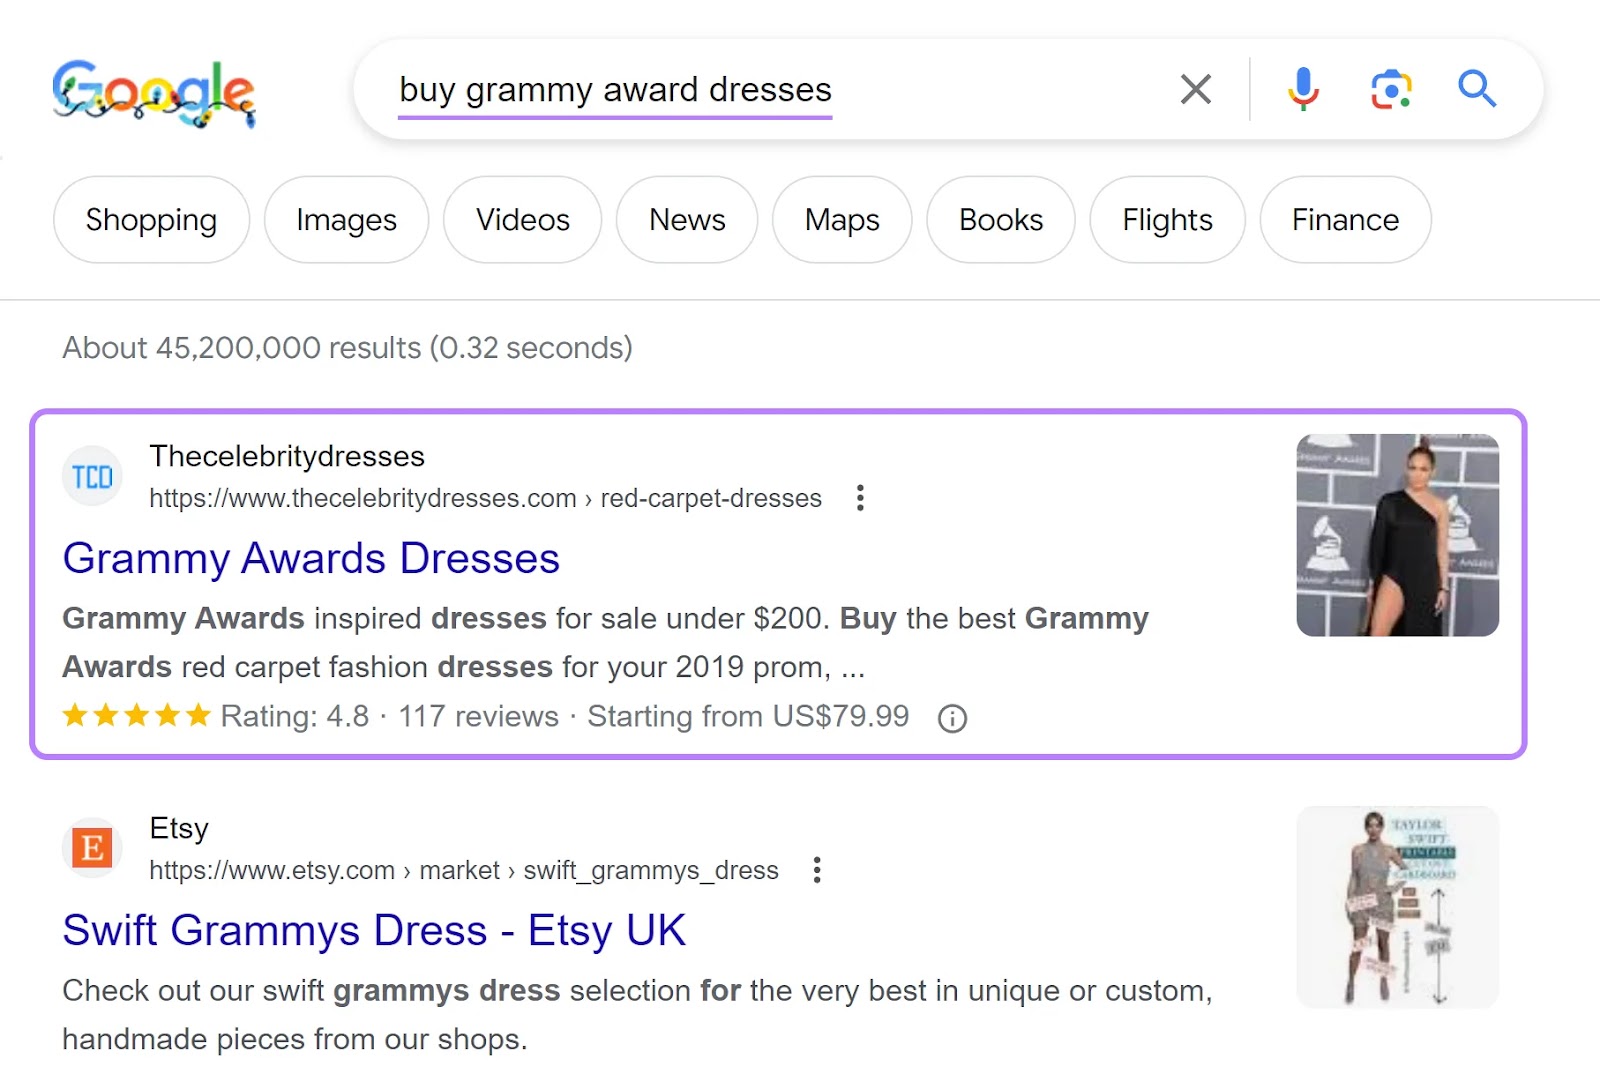 TheCelebrityDresses.com" ranks first on Google SERP for “buy grammy awards dresses"